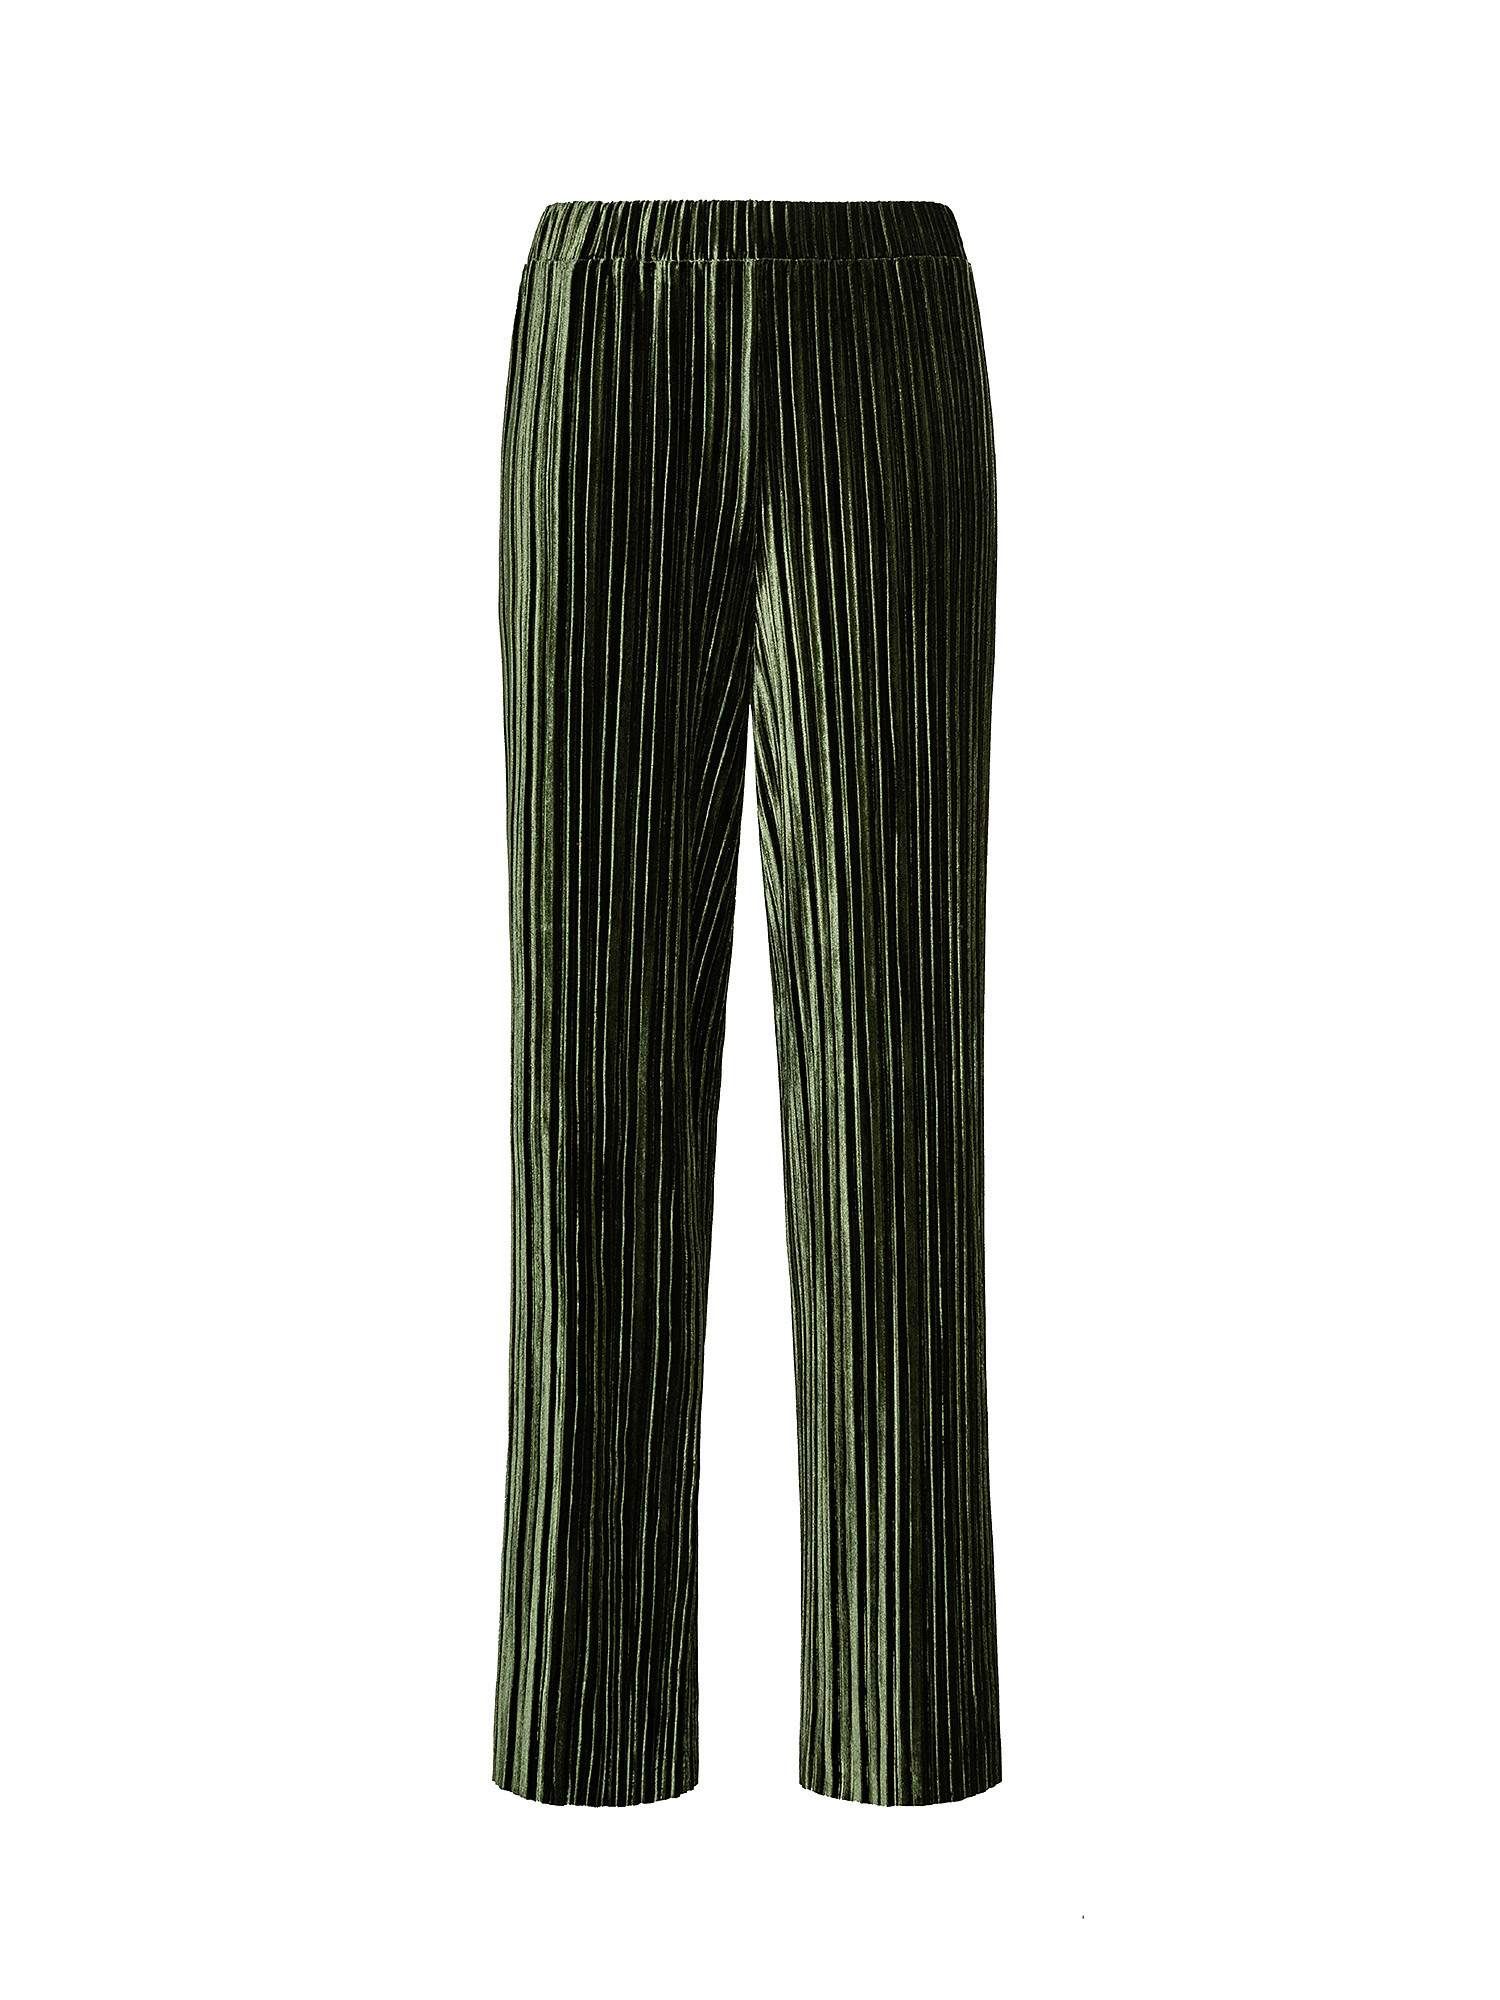 Pantalone in velour plissà©, Verde, large image number 0